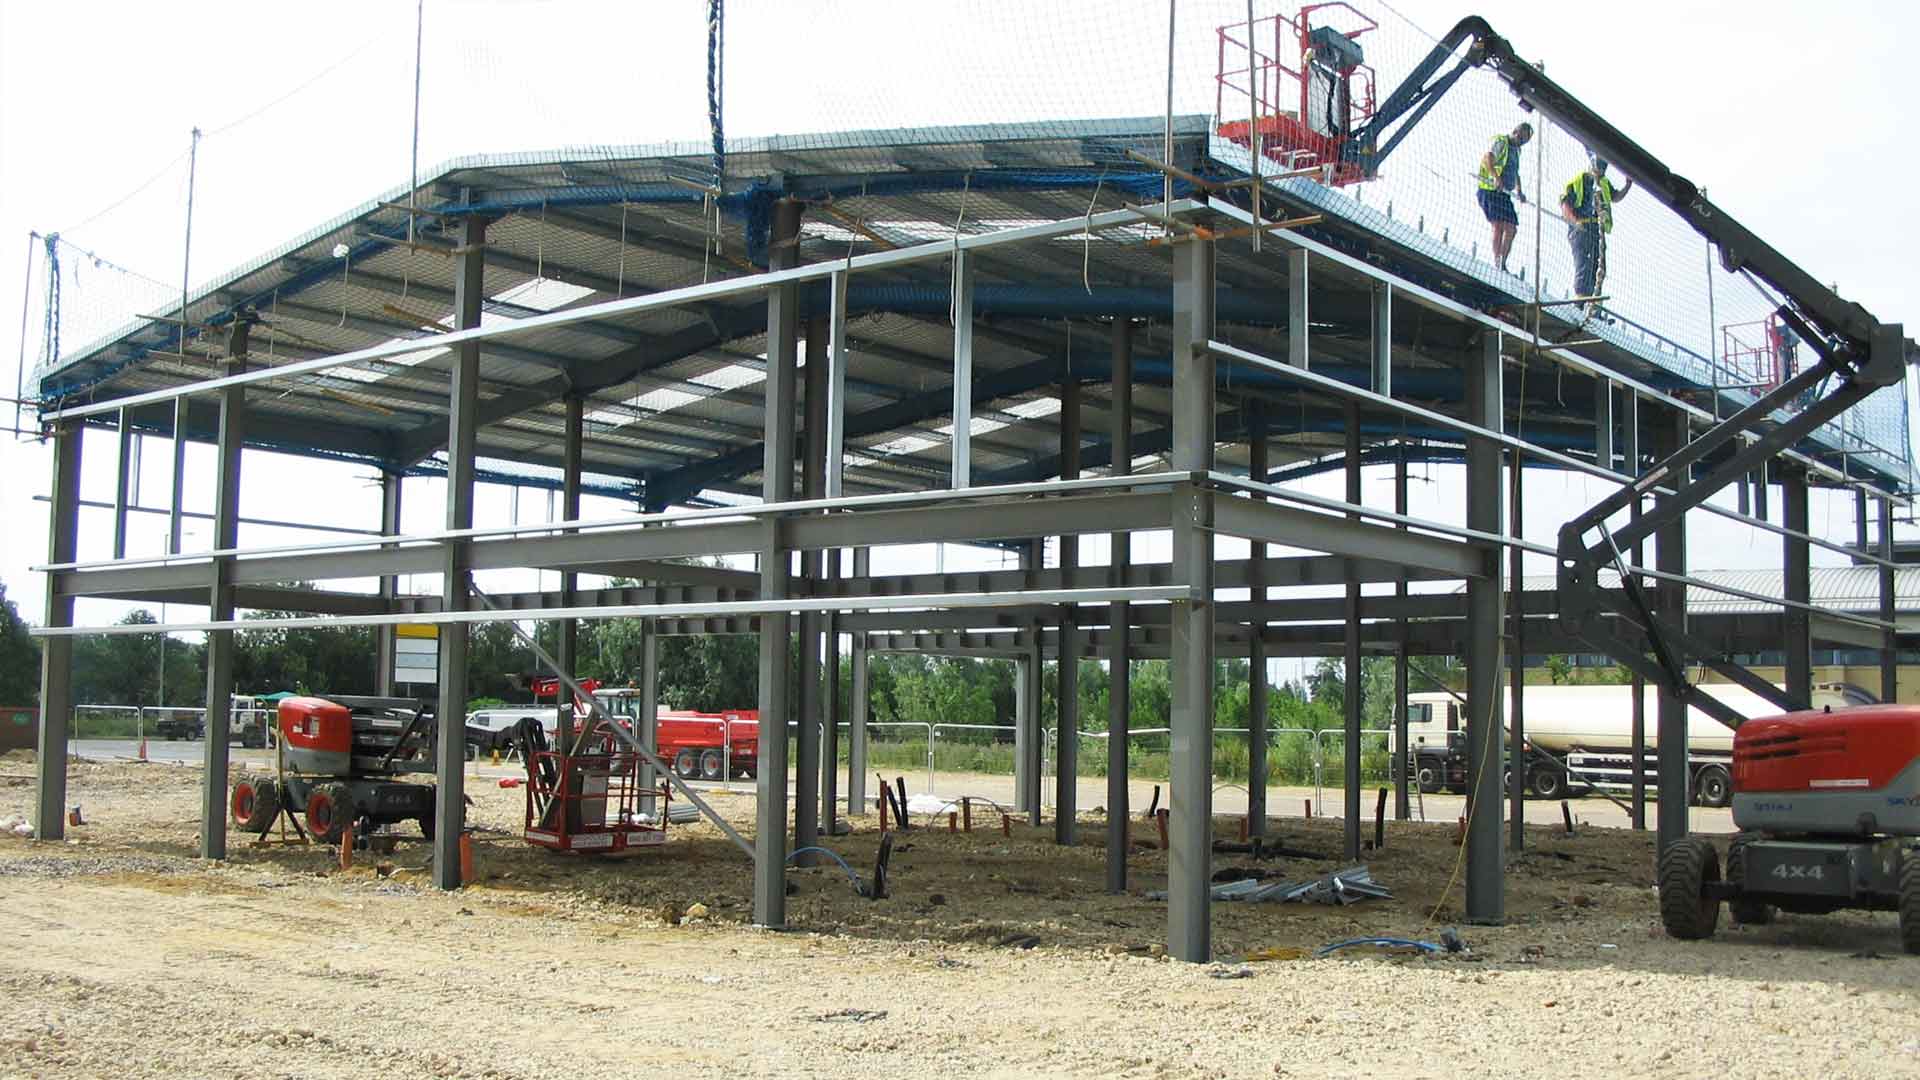 Commercial steel frame building under construction for Glenmore Business Park